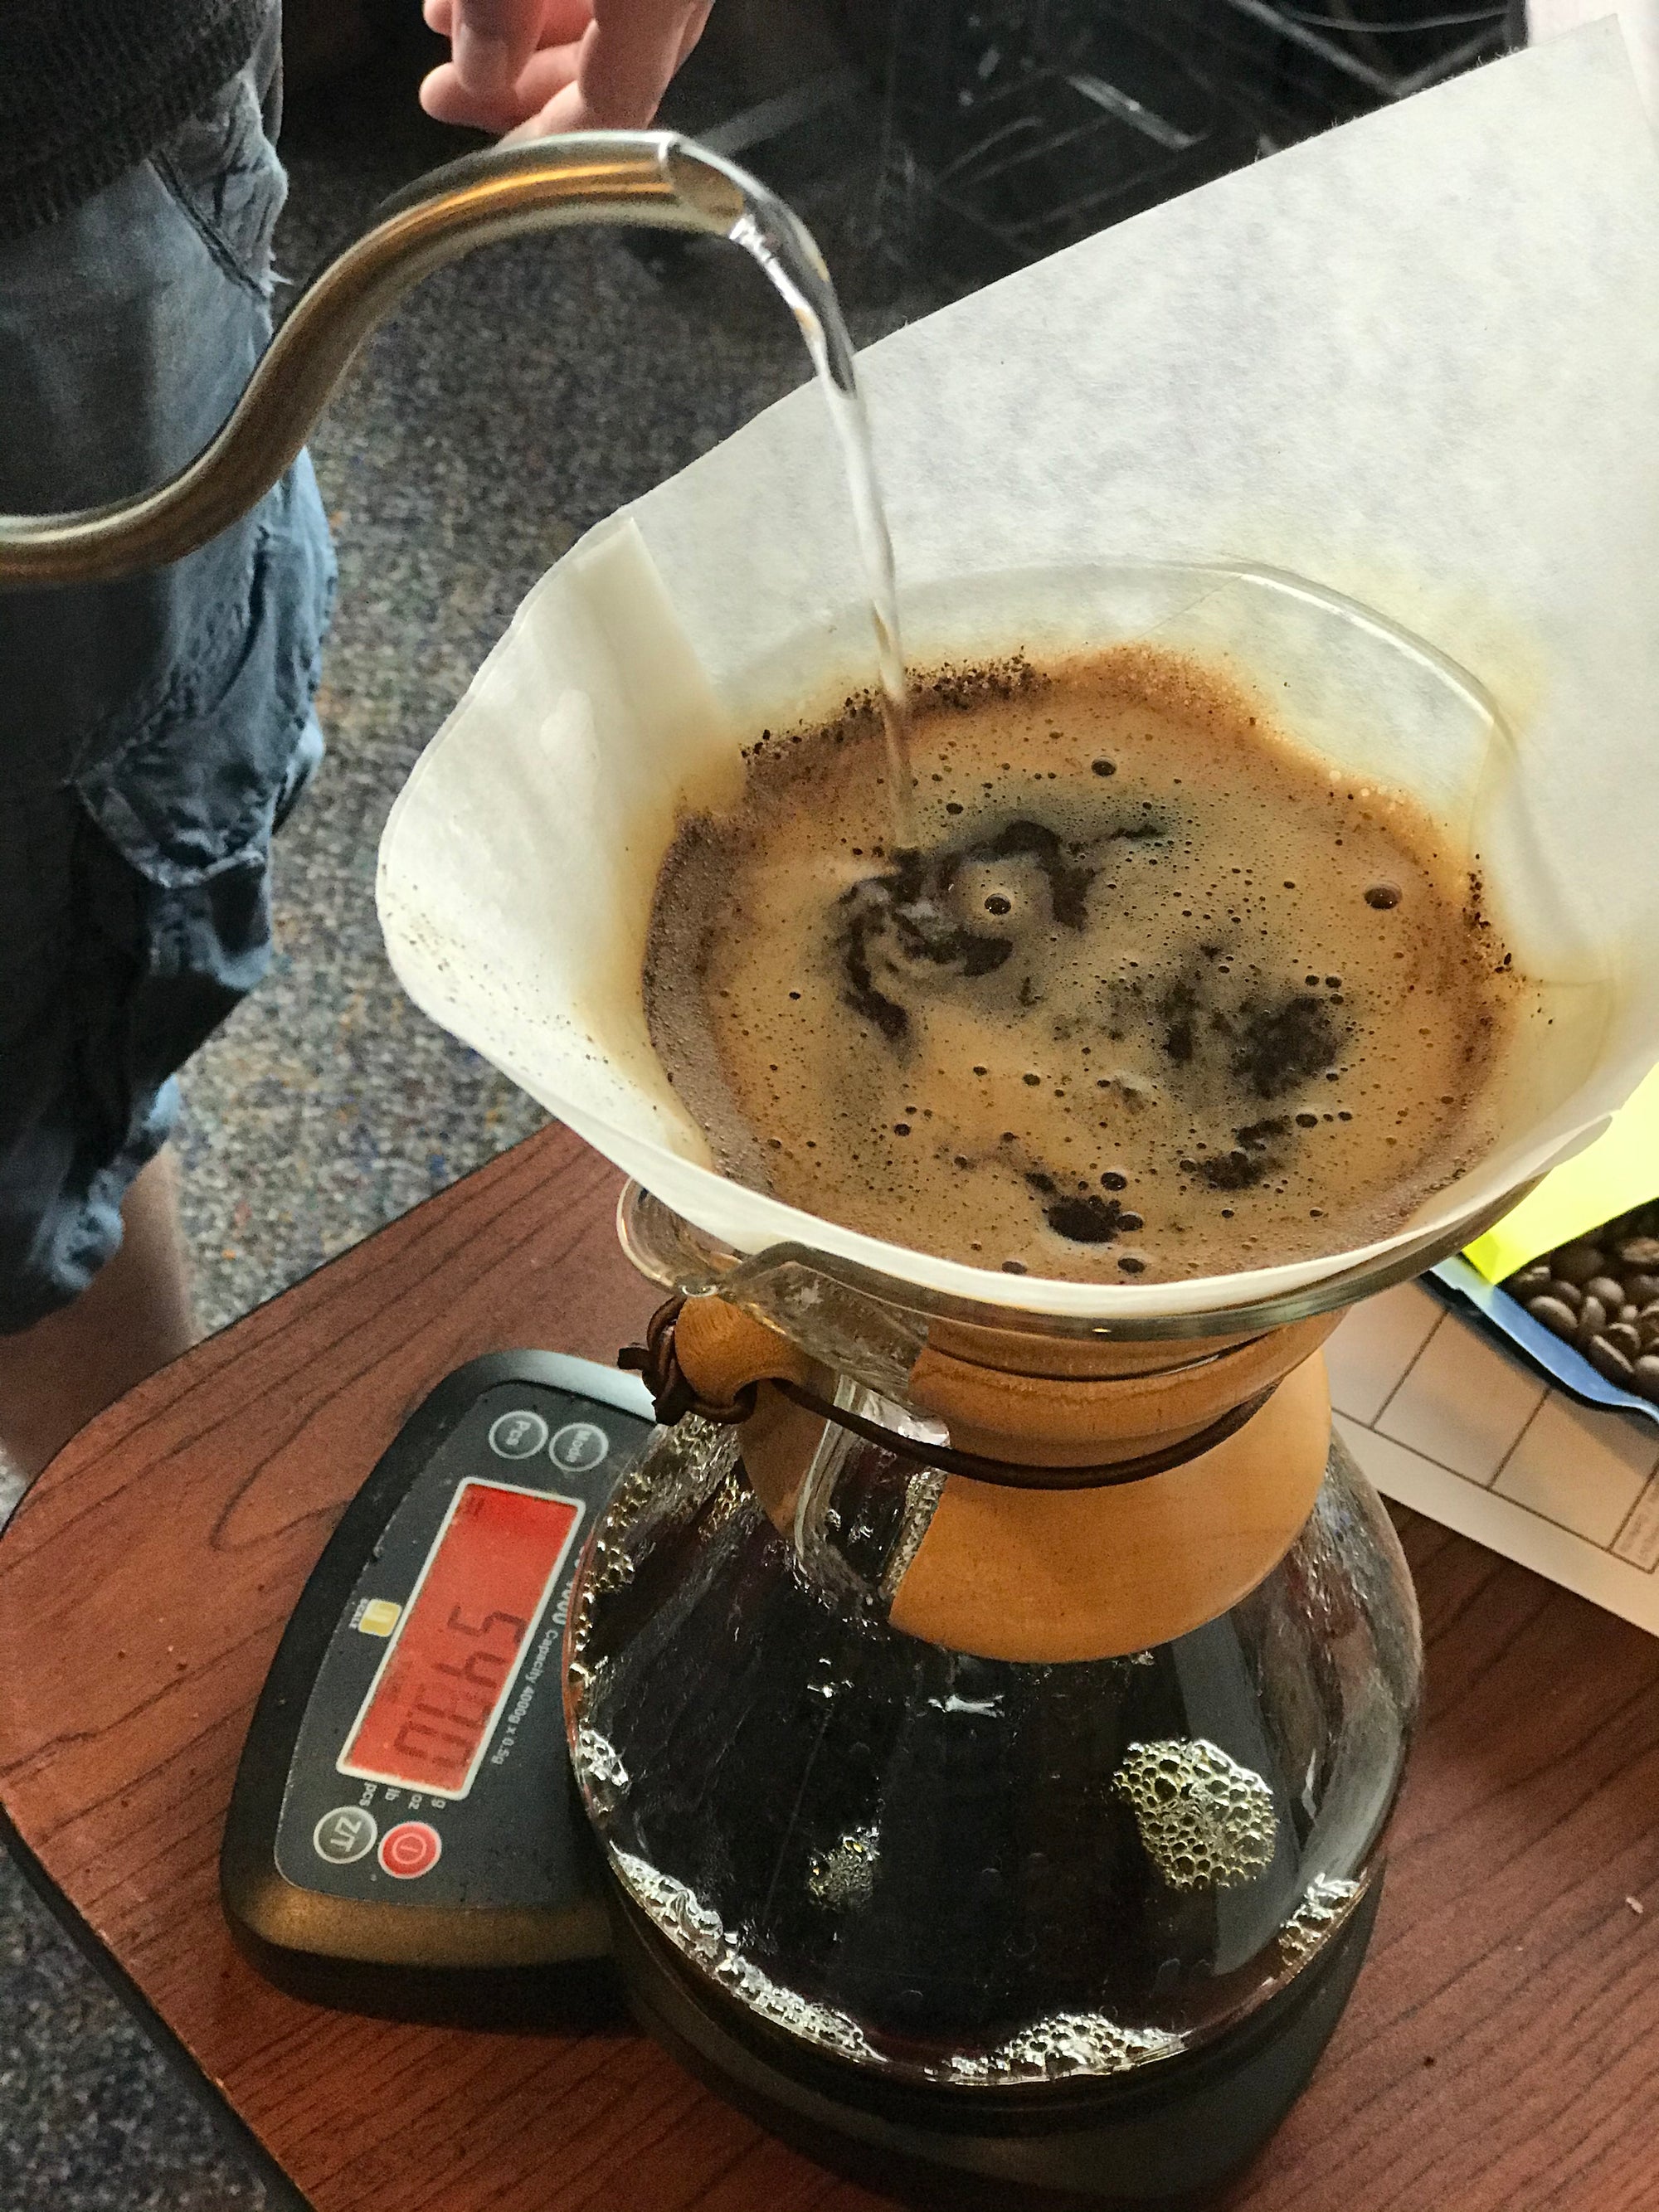 Our Top 4 Unorthodox Coffee-Making Hacks